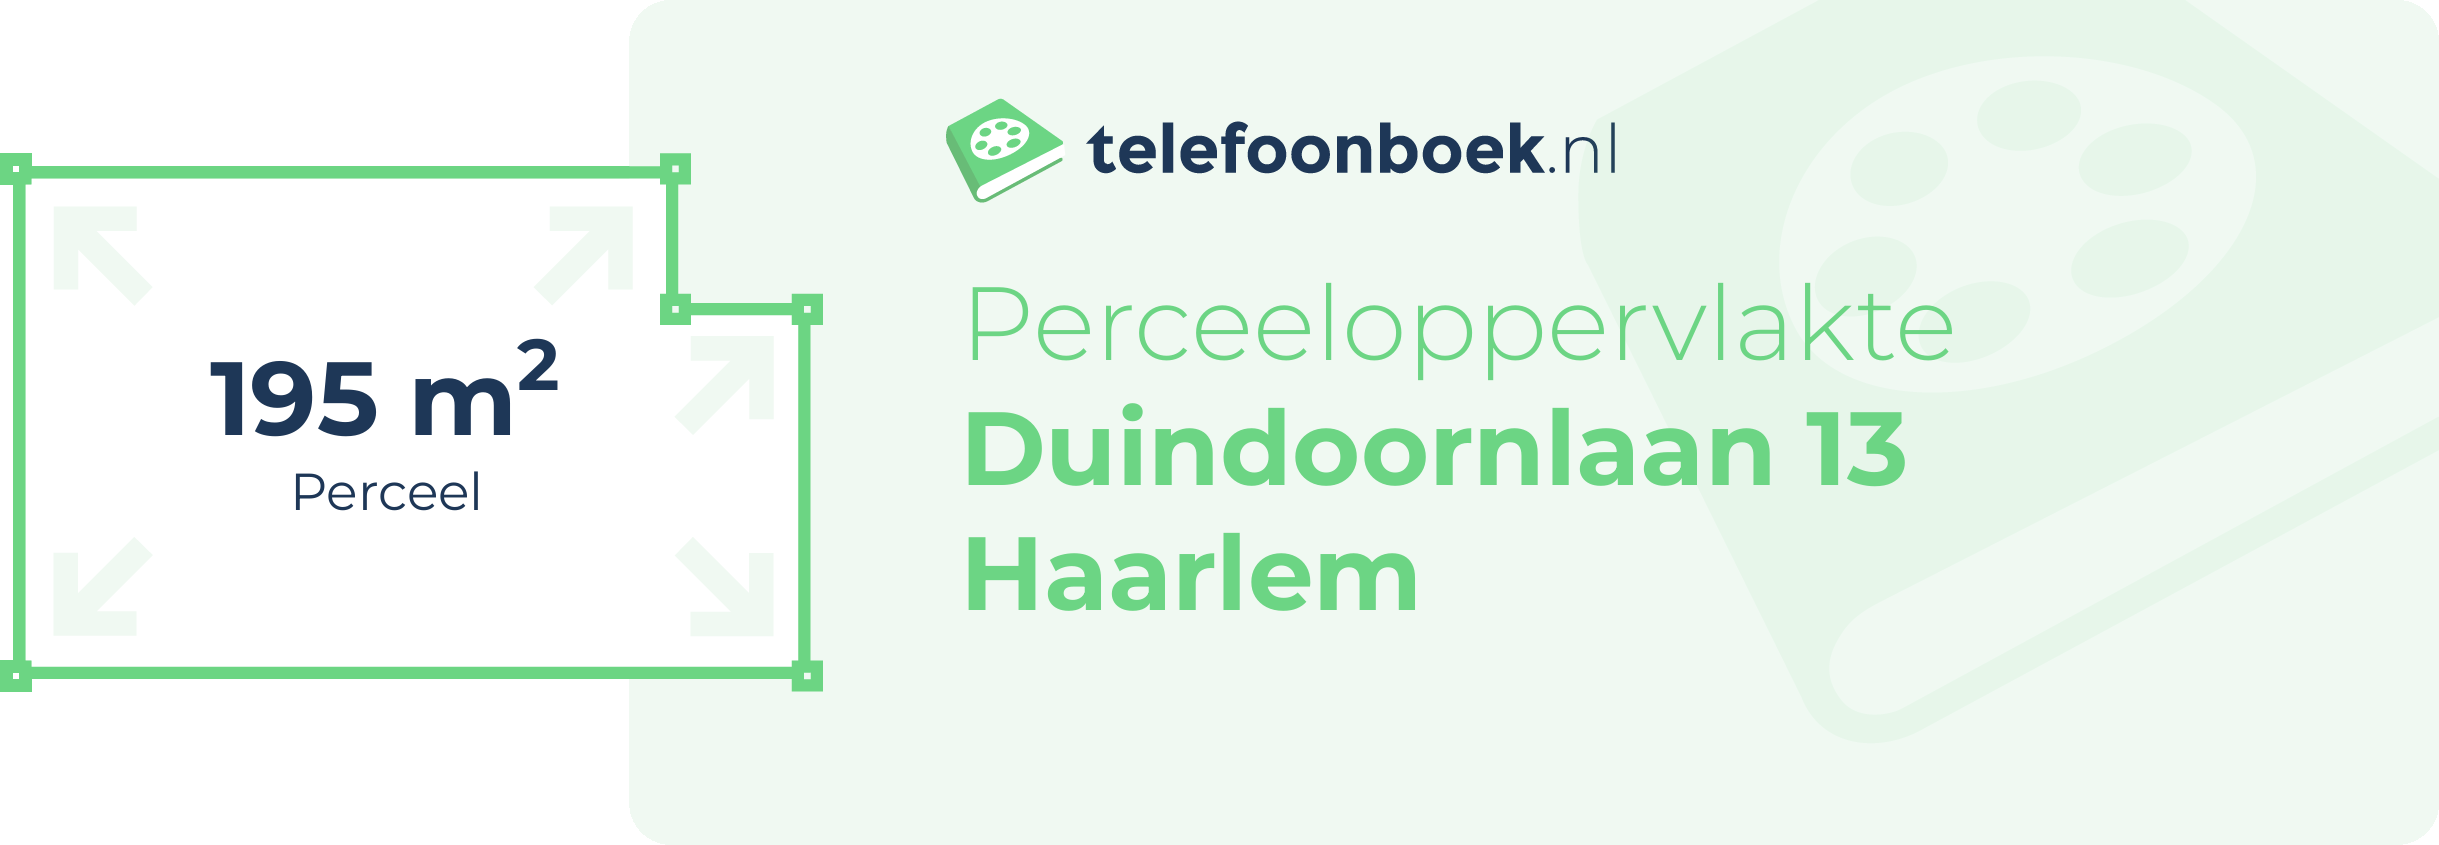 Perceeloppervlakte Duindoornlaan 13 Haarlem